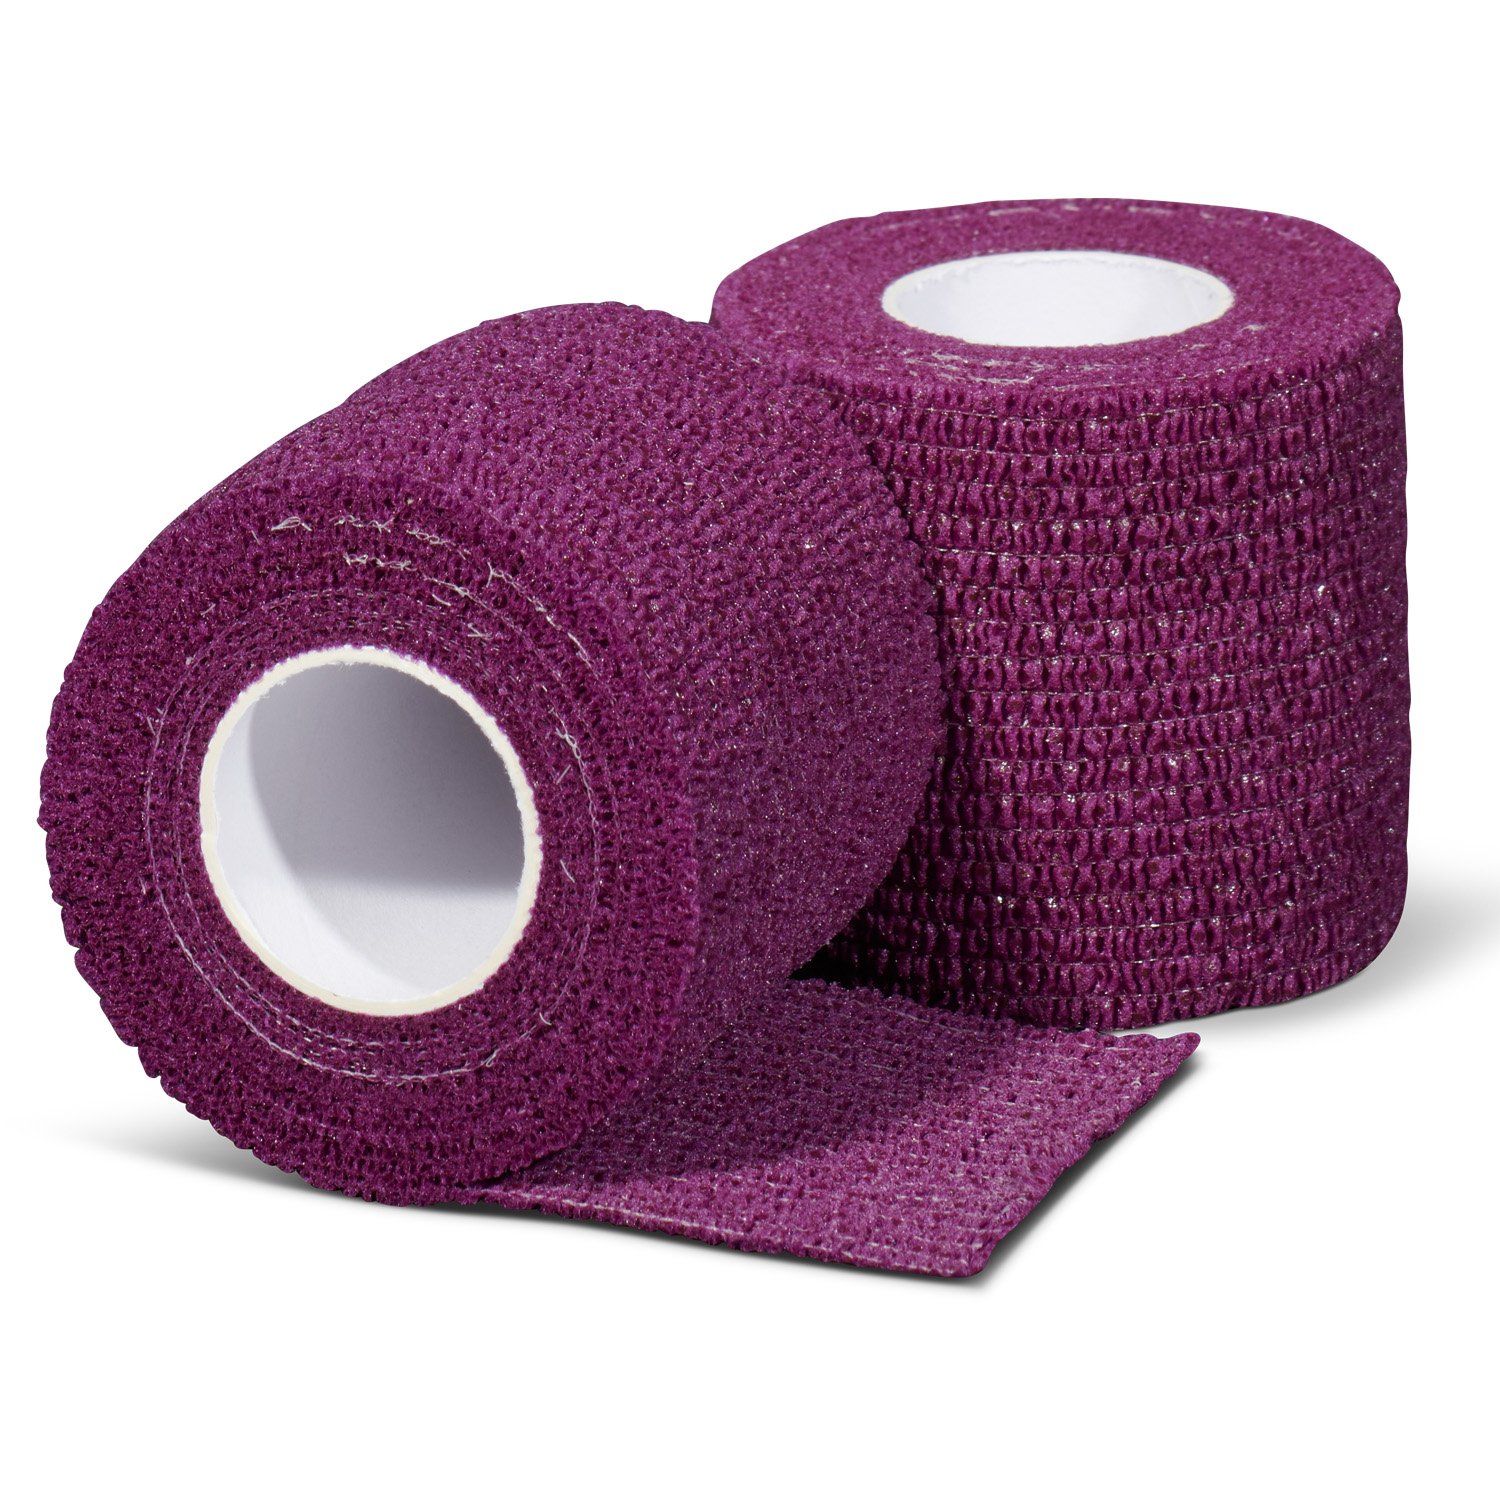 gladiator sports underwrap bandage per 8 rolls purple